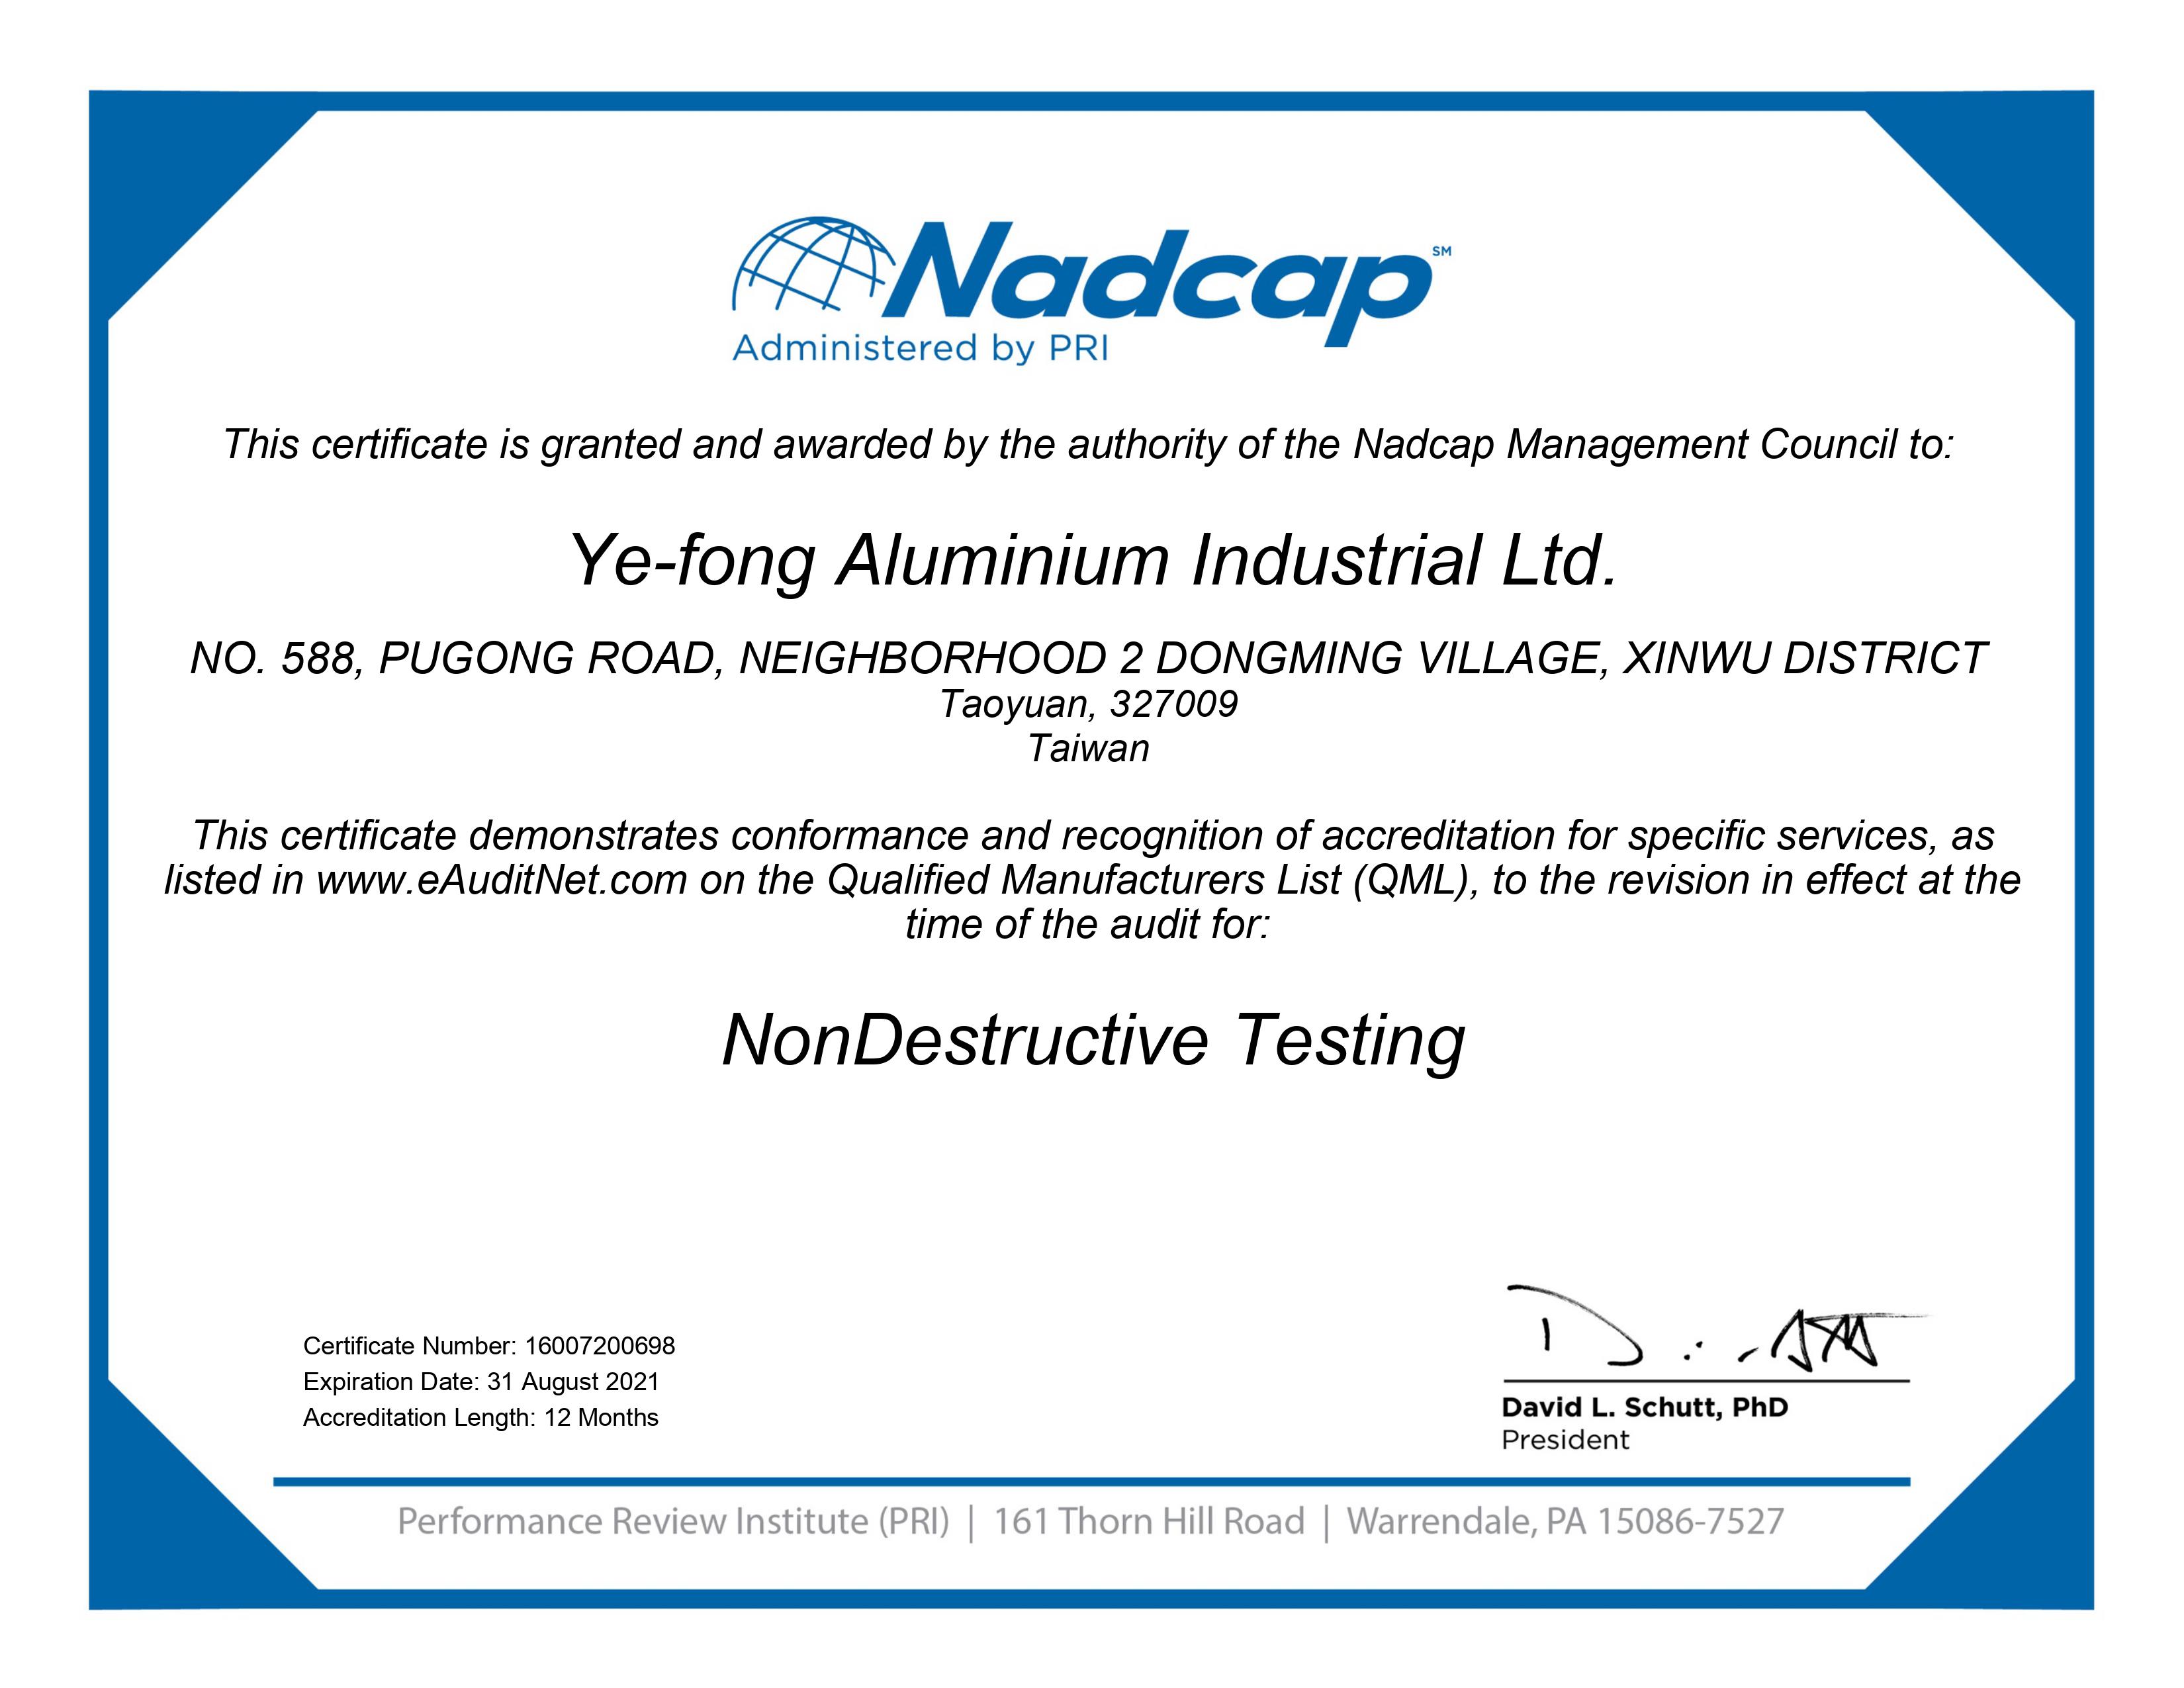 NADCAP-NDT certificates